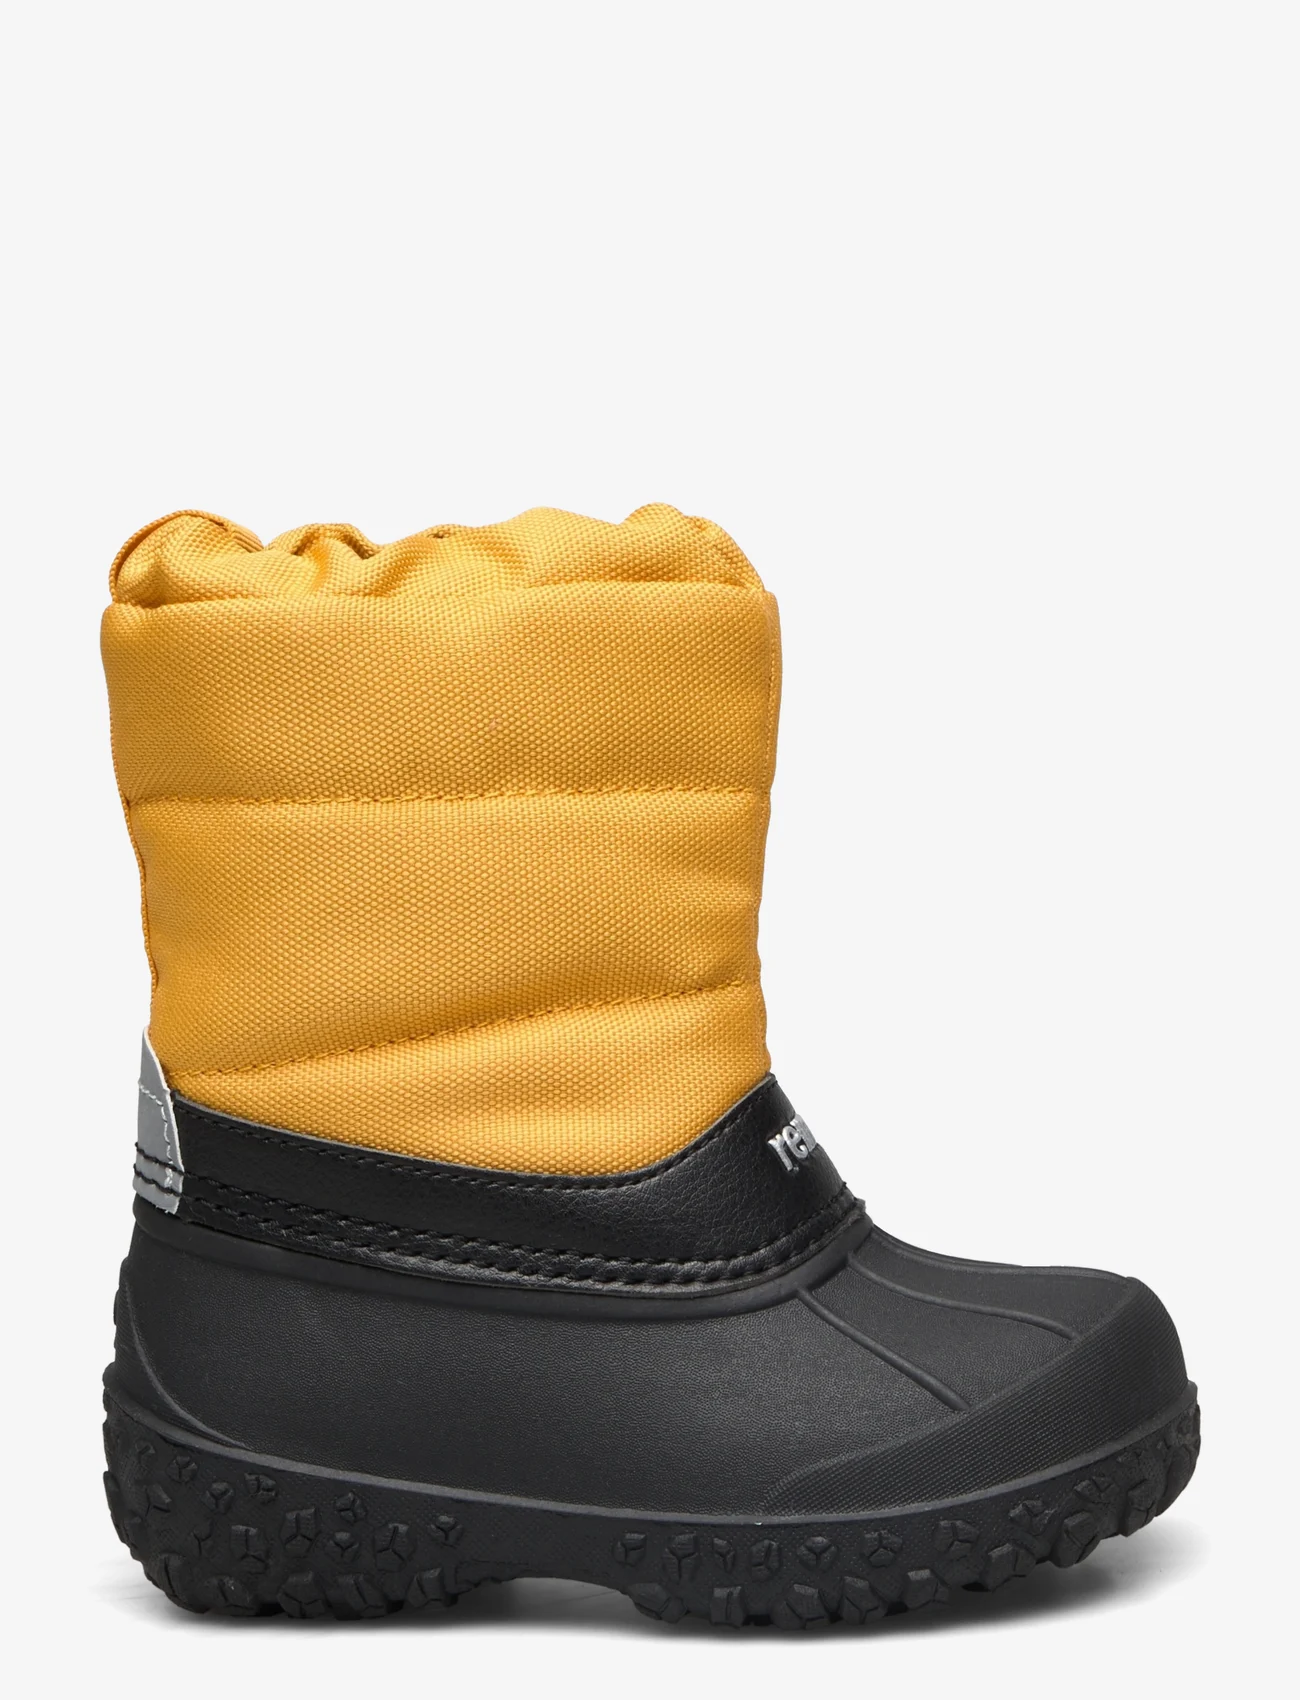 Reima - Winter boots, Loskari - kinder - ochre yellow - 1